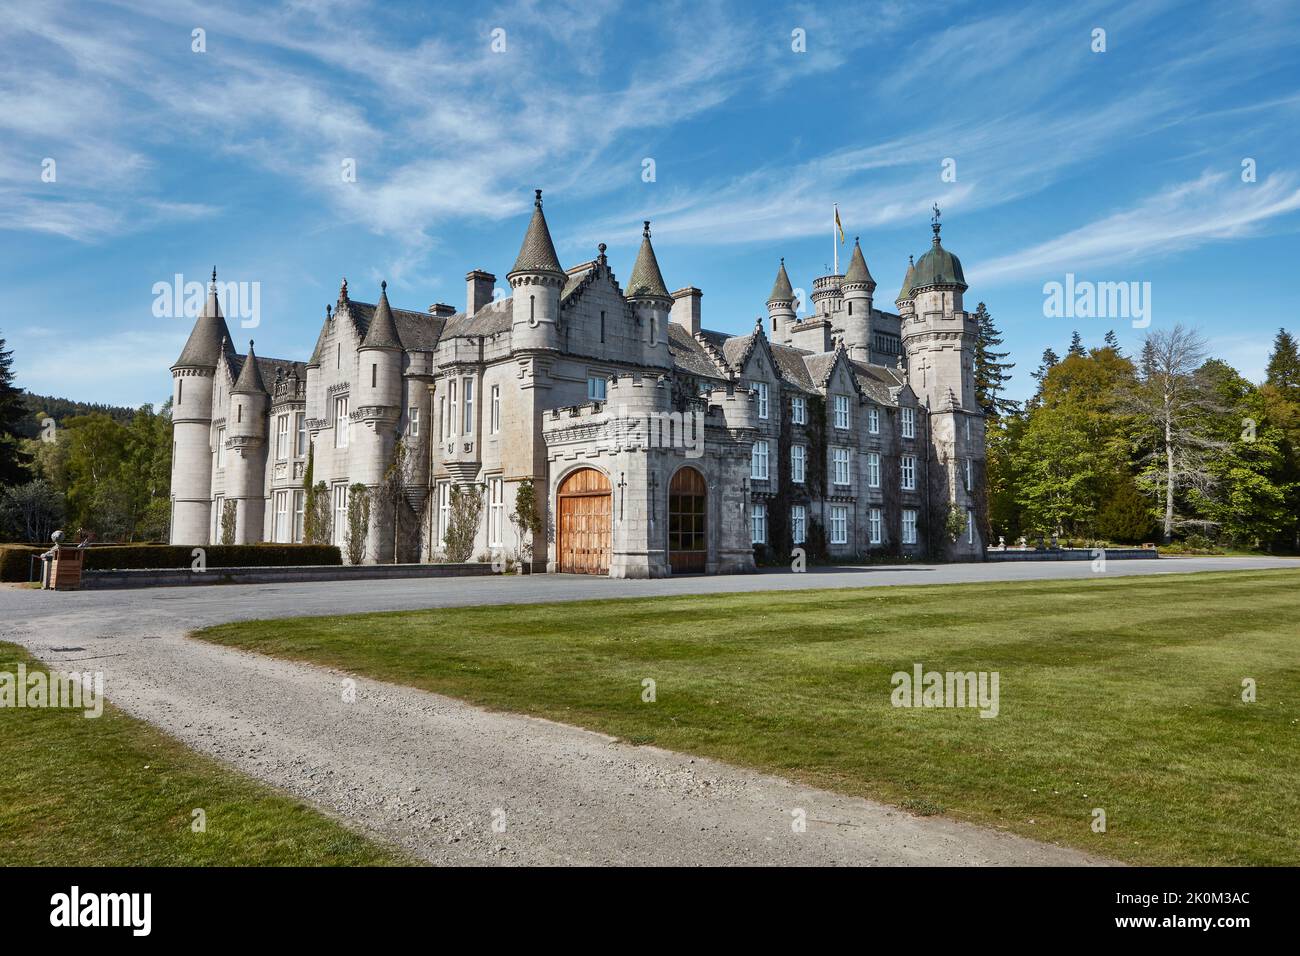 Schottland, Balmoral, Balmoral Castle, 2019, Mai, 14: Balmoral Castle and Grounds, Royal Deeside, Schottland. Stockfoto